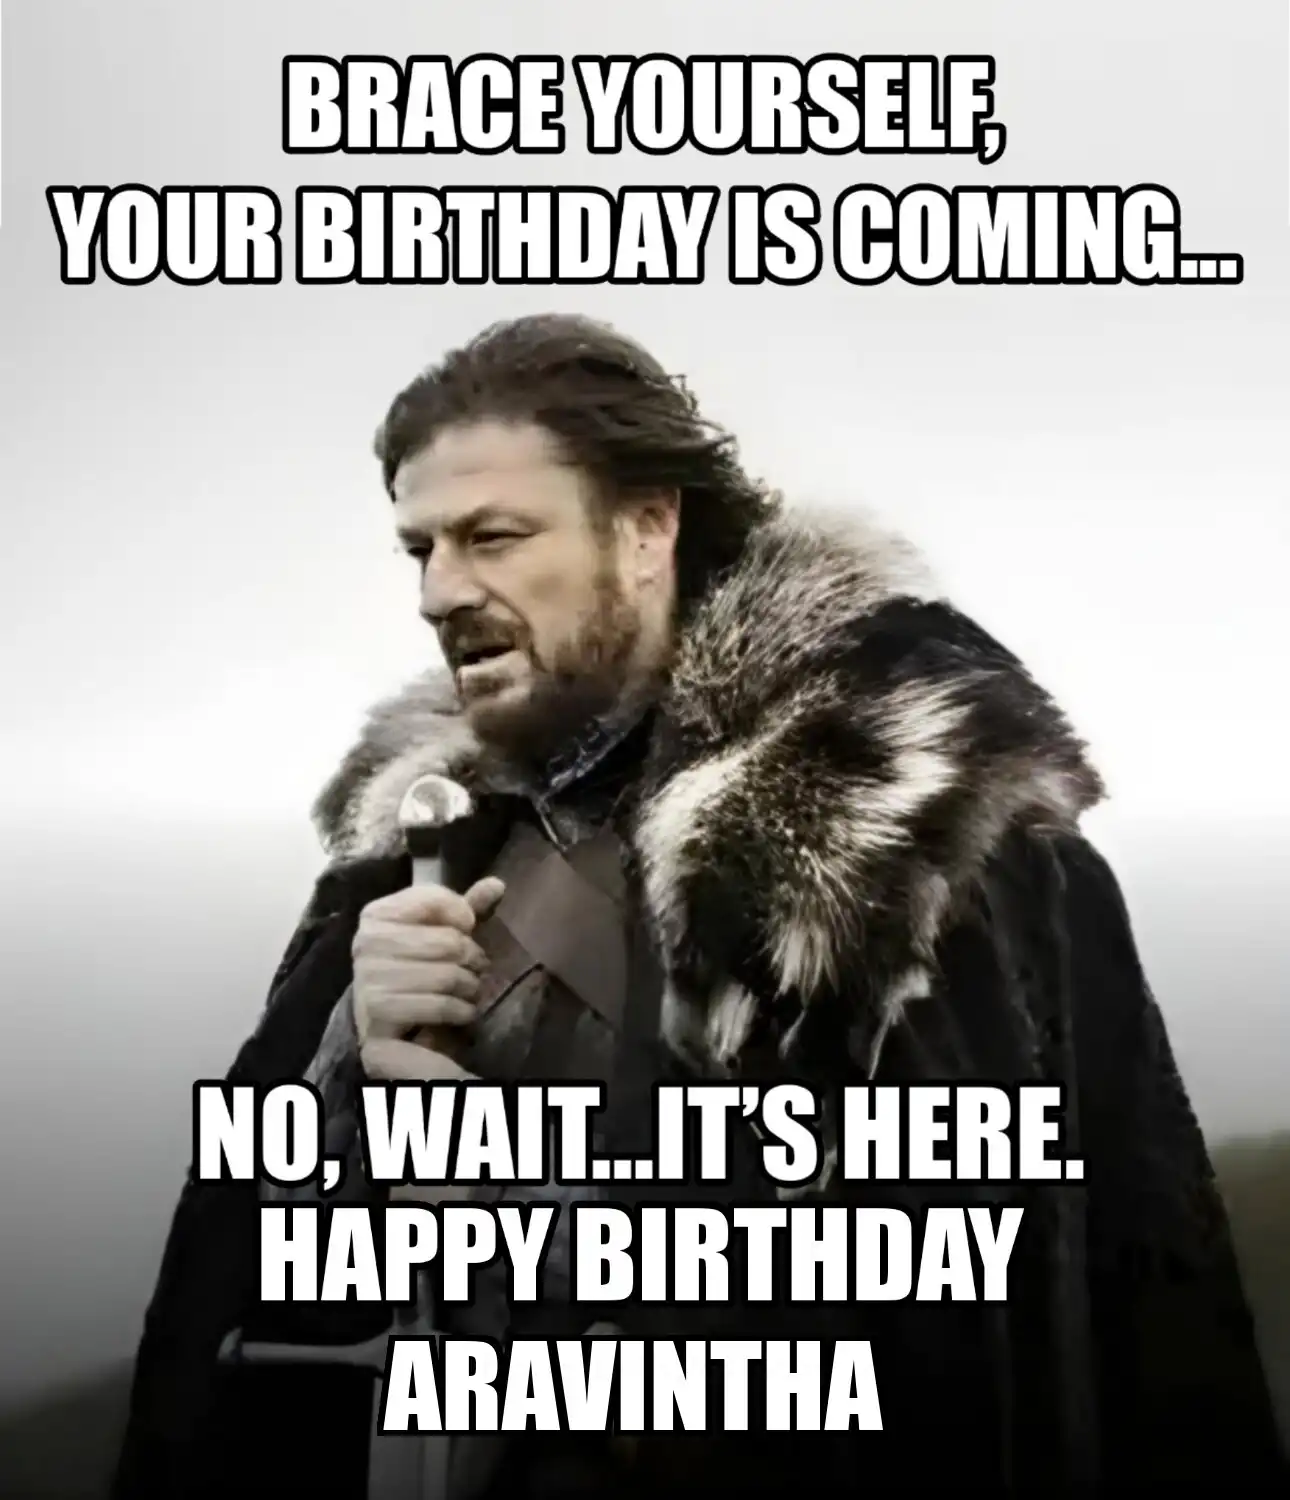 Happy Birthday Aravintha Brace Yourself Your Birthday Is Coming Meme